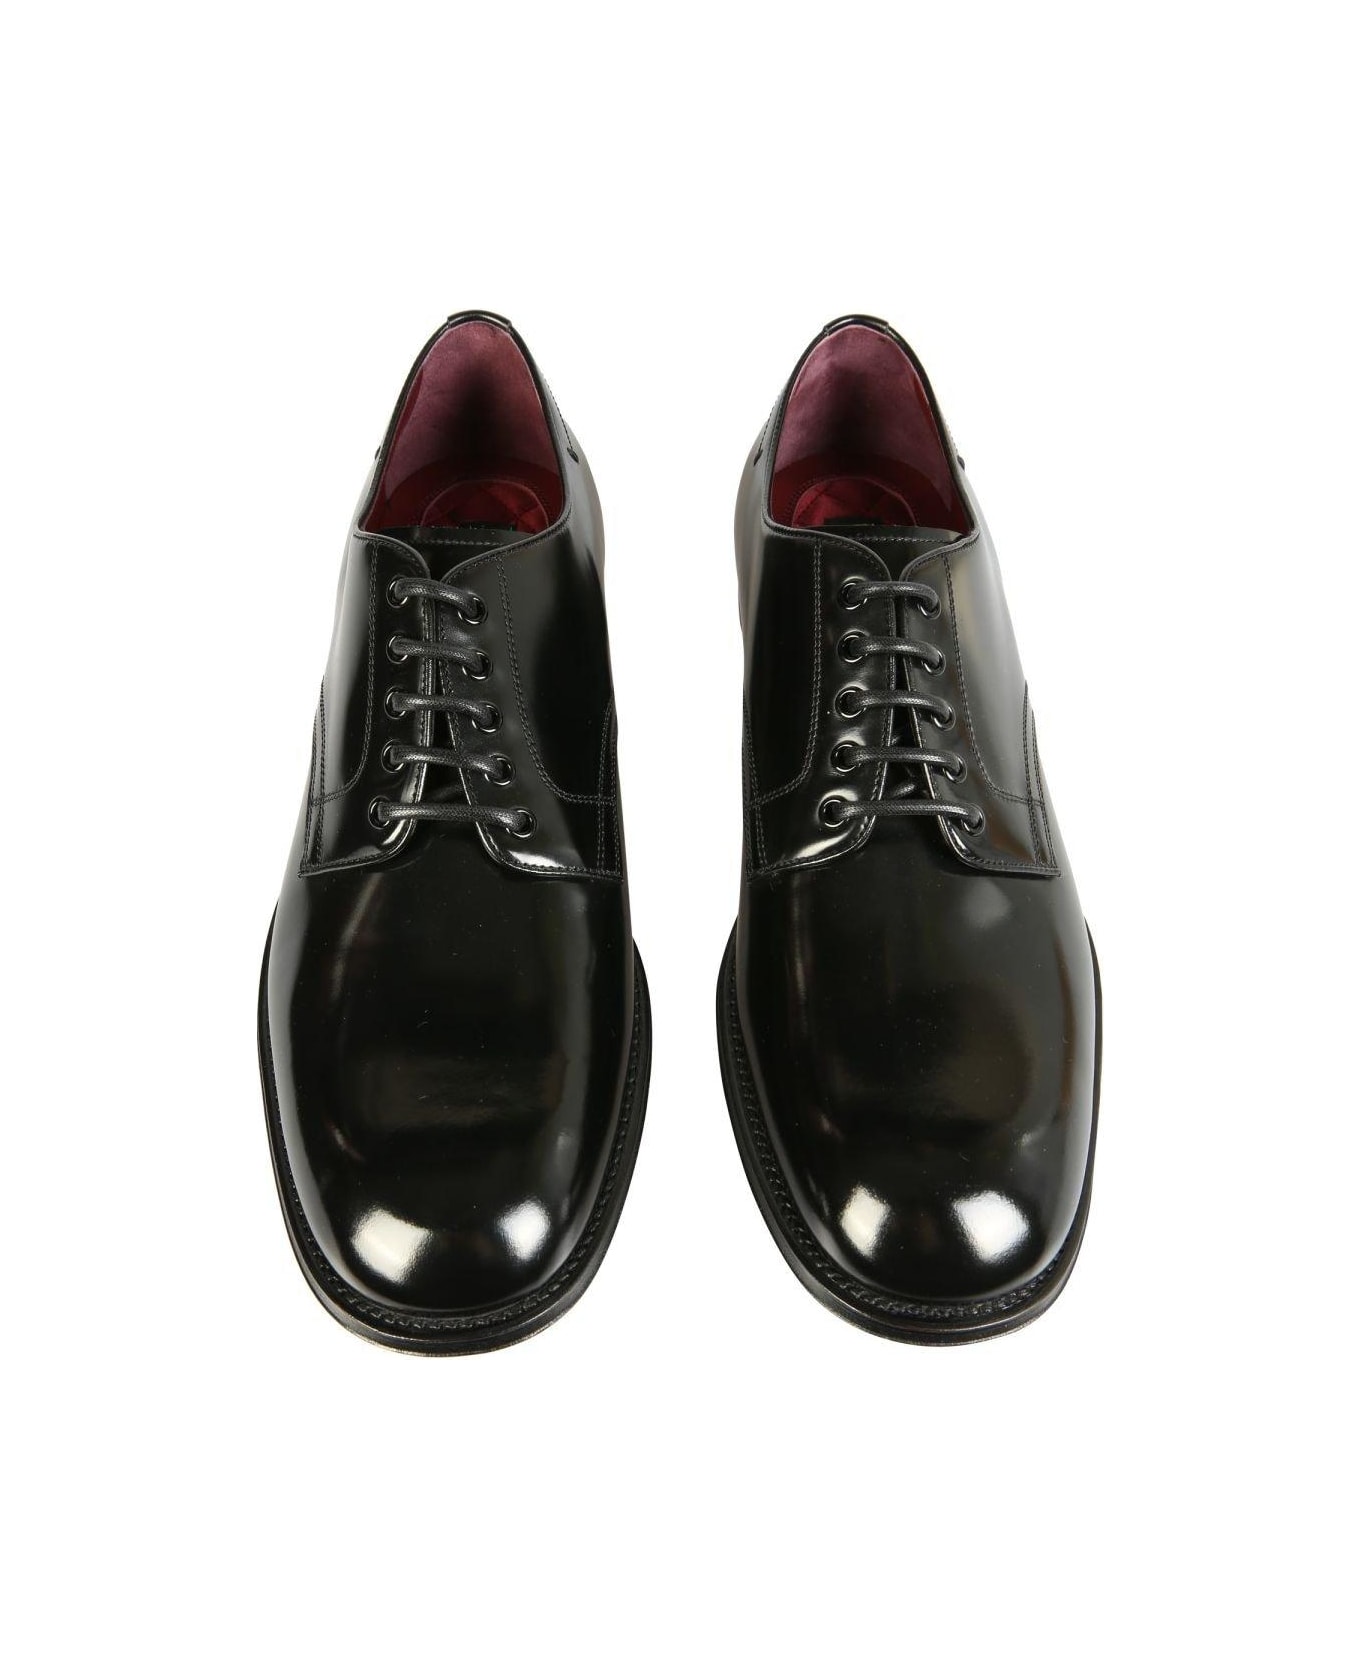 Dolce & Gabbana Classic Derby Shoes DARK - Black